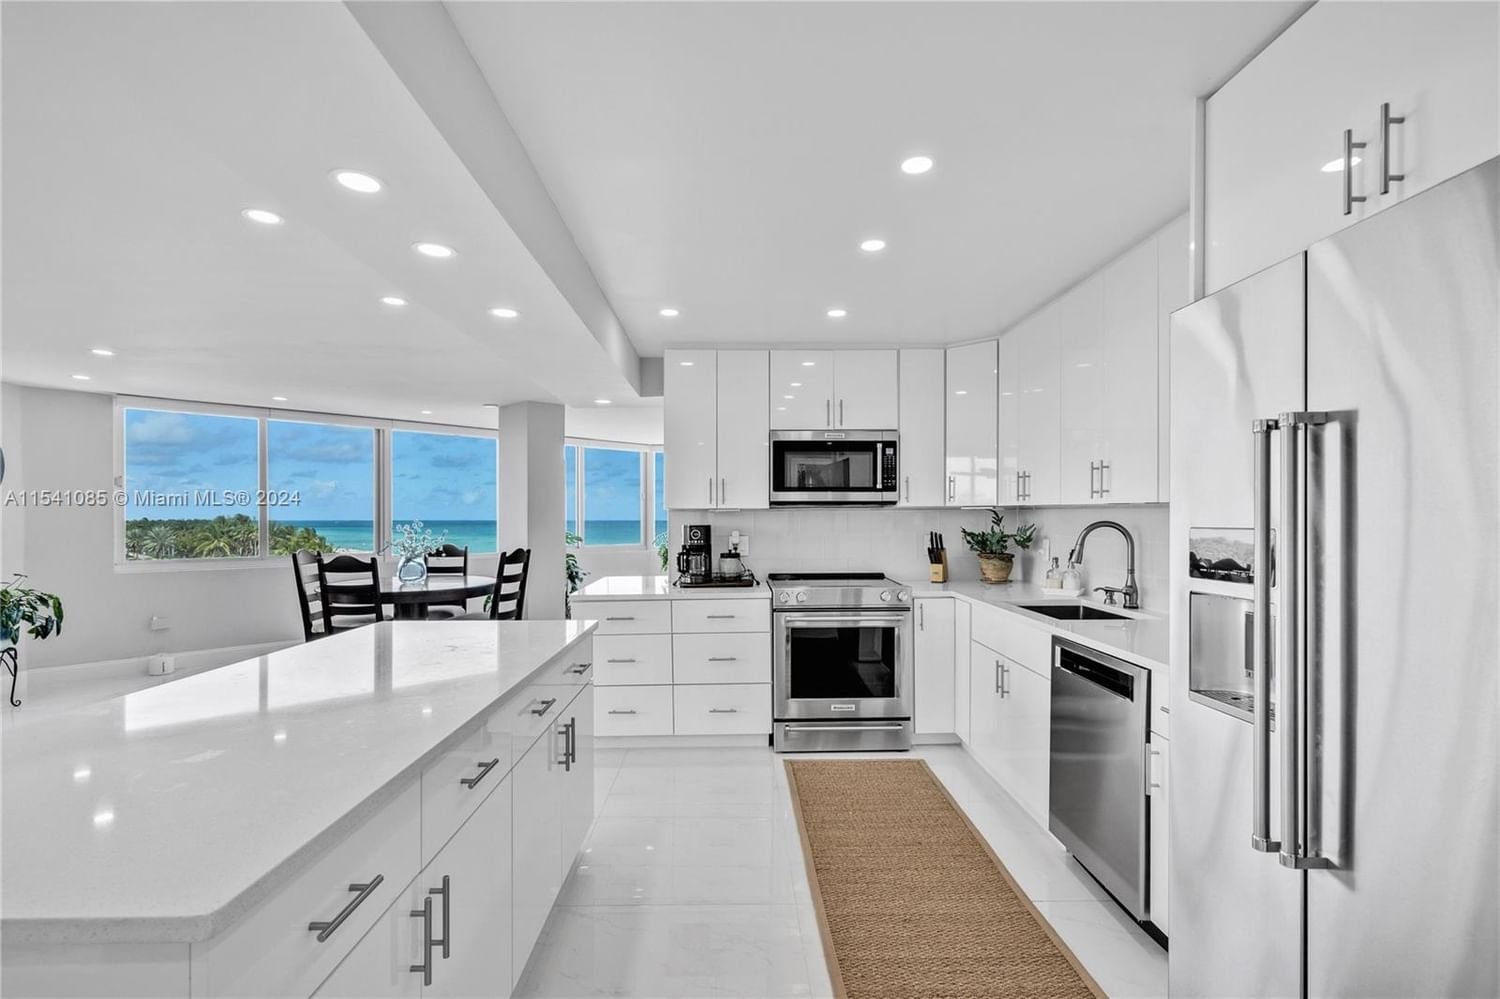 Real estate property located at 7135 Collins Ave #505, Miami-Dade County, BURLEIGH HOUSE CONDO, Miami Beach, FL